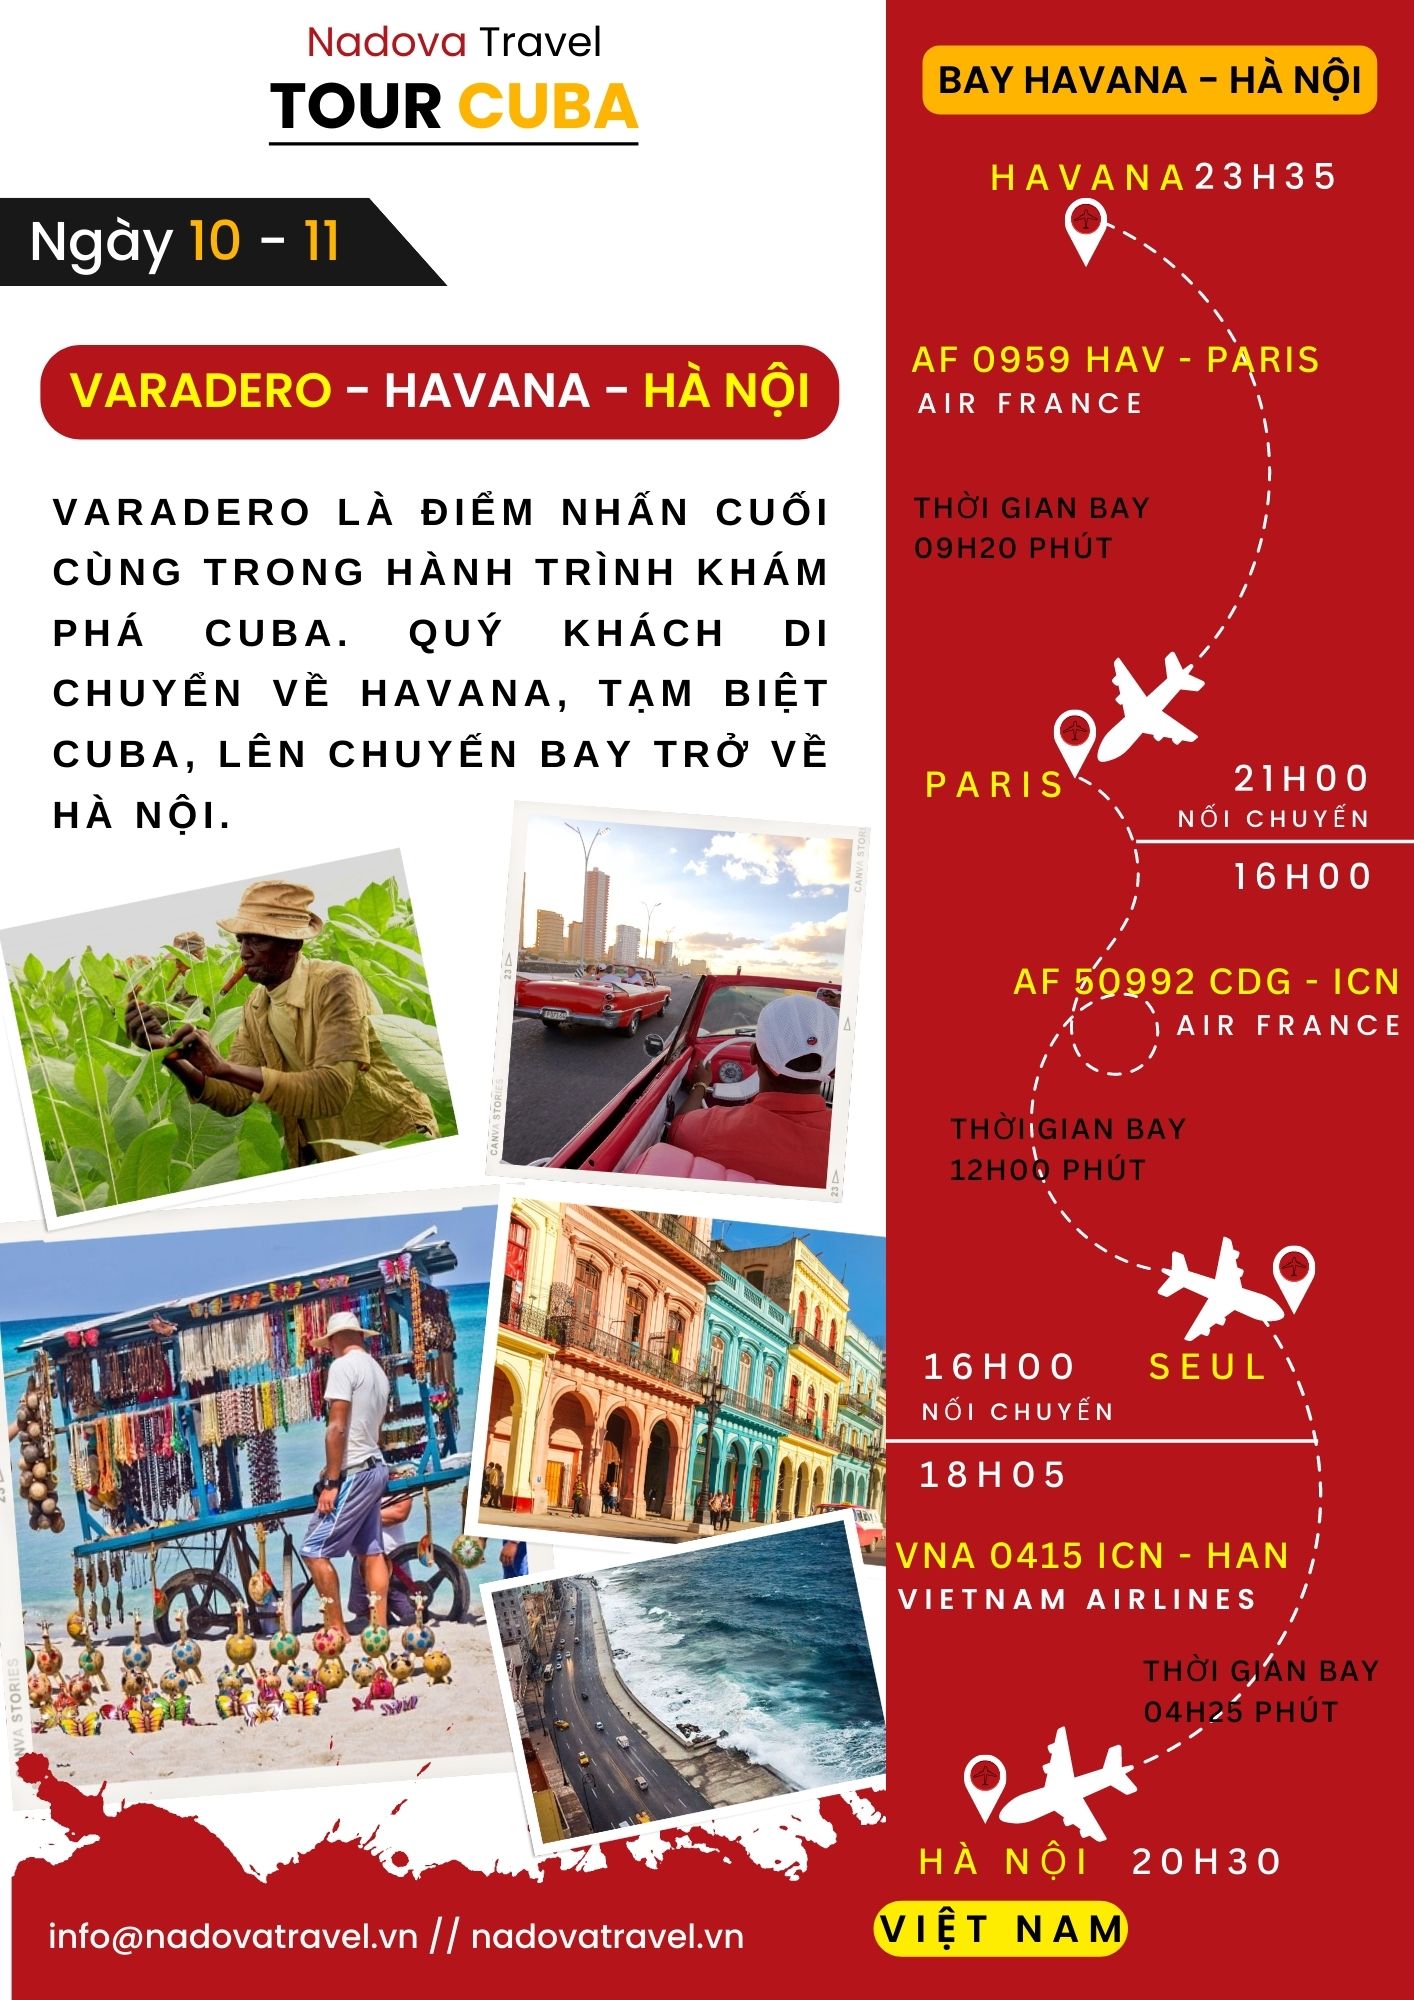 Bay Havana - Hanoi - Tour Cuba